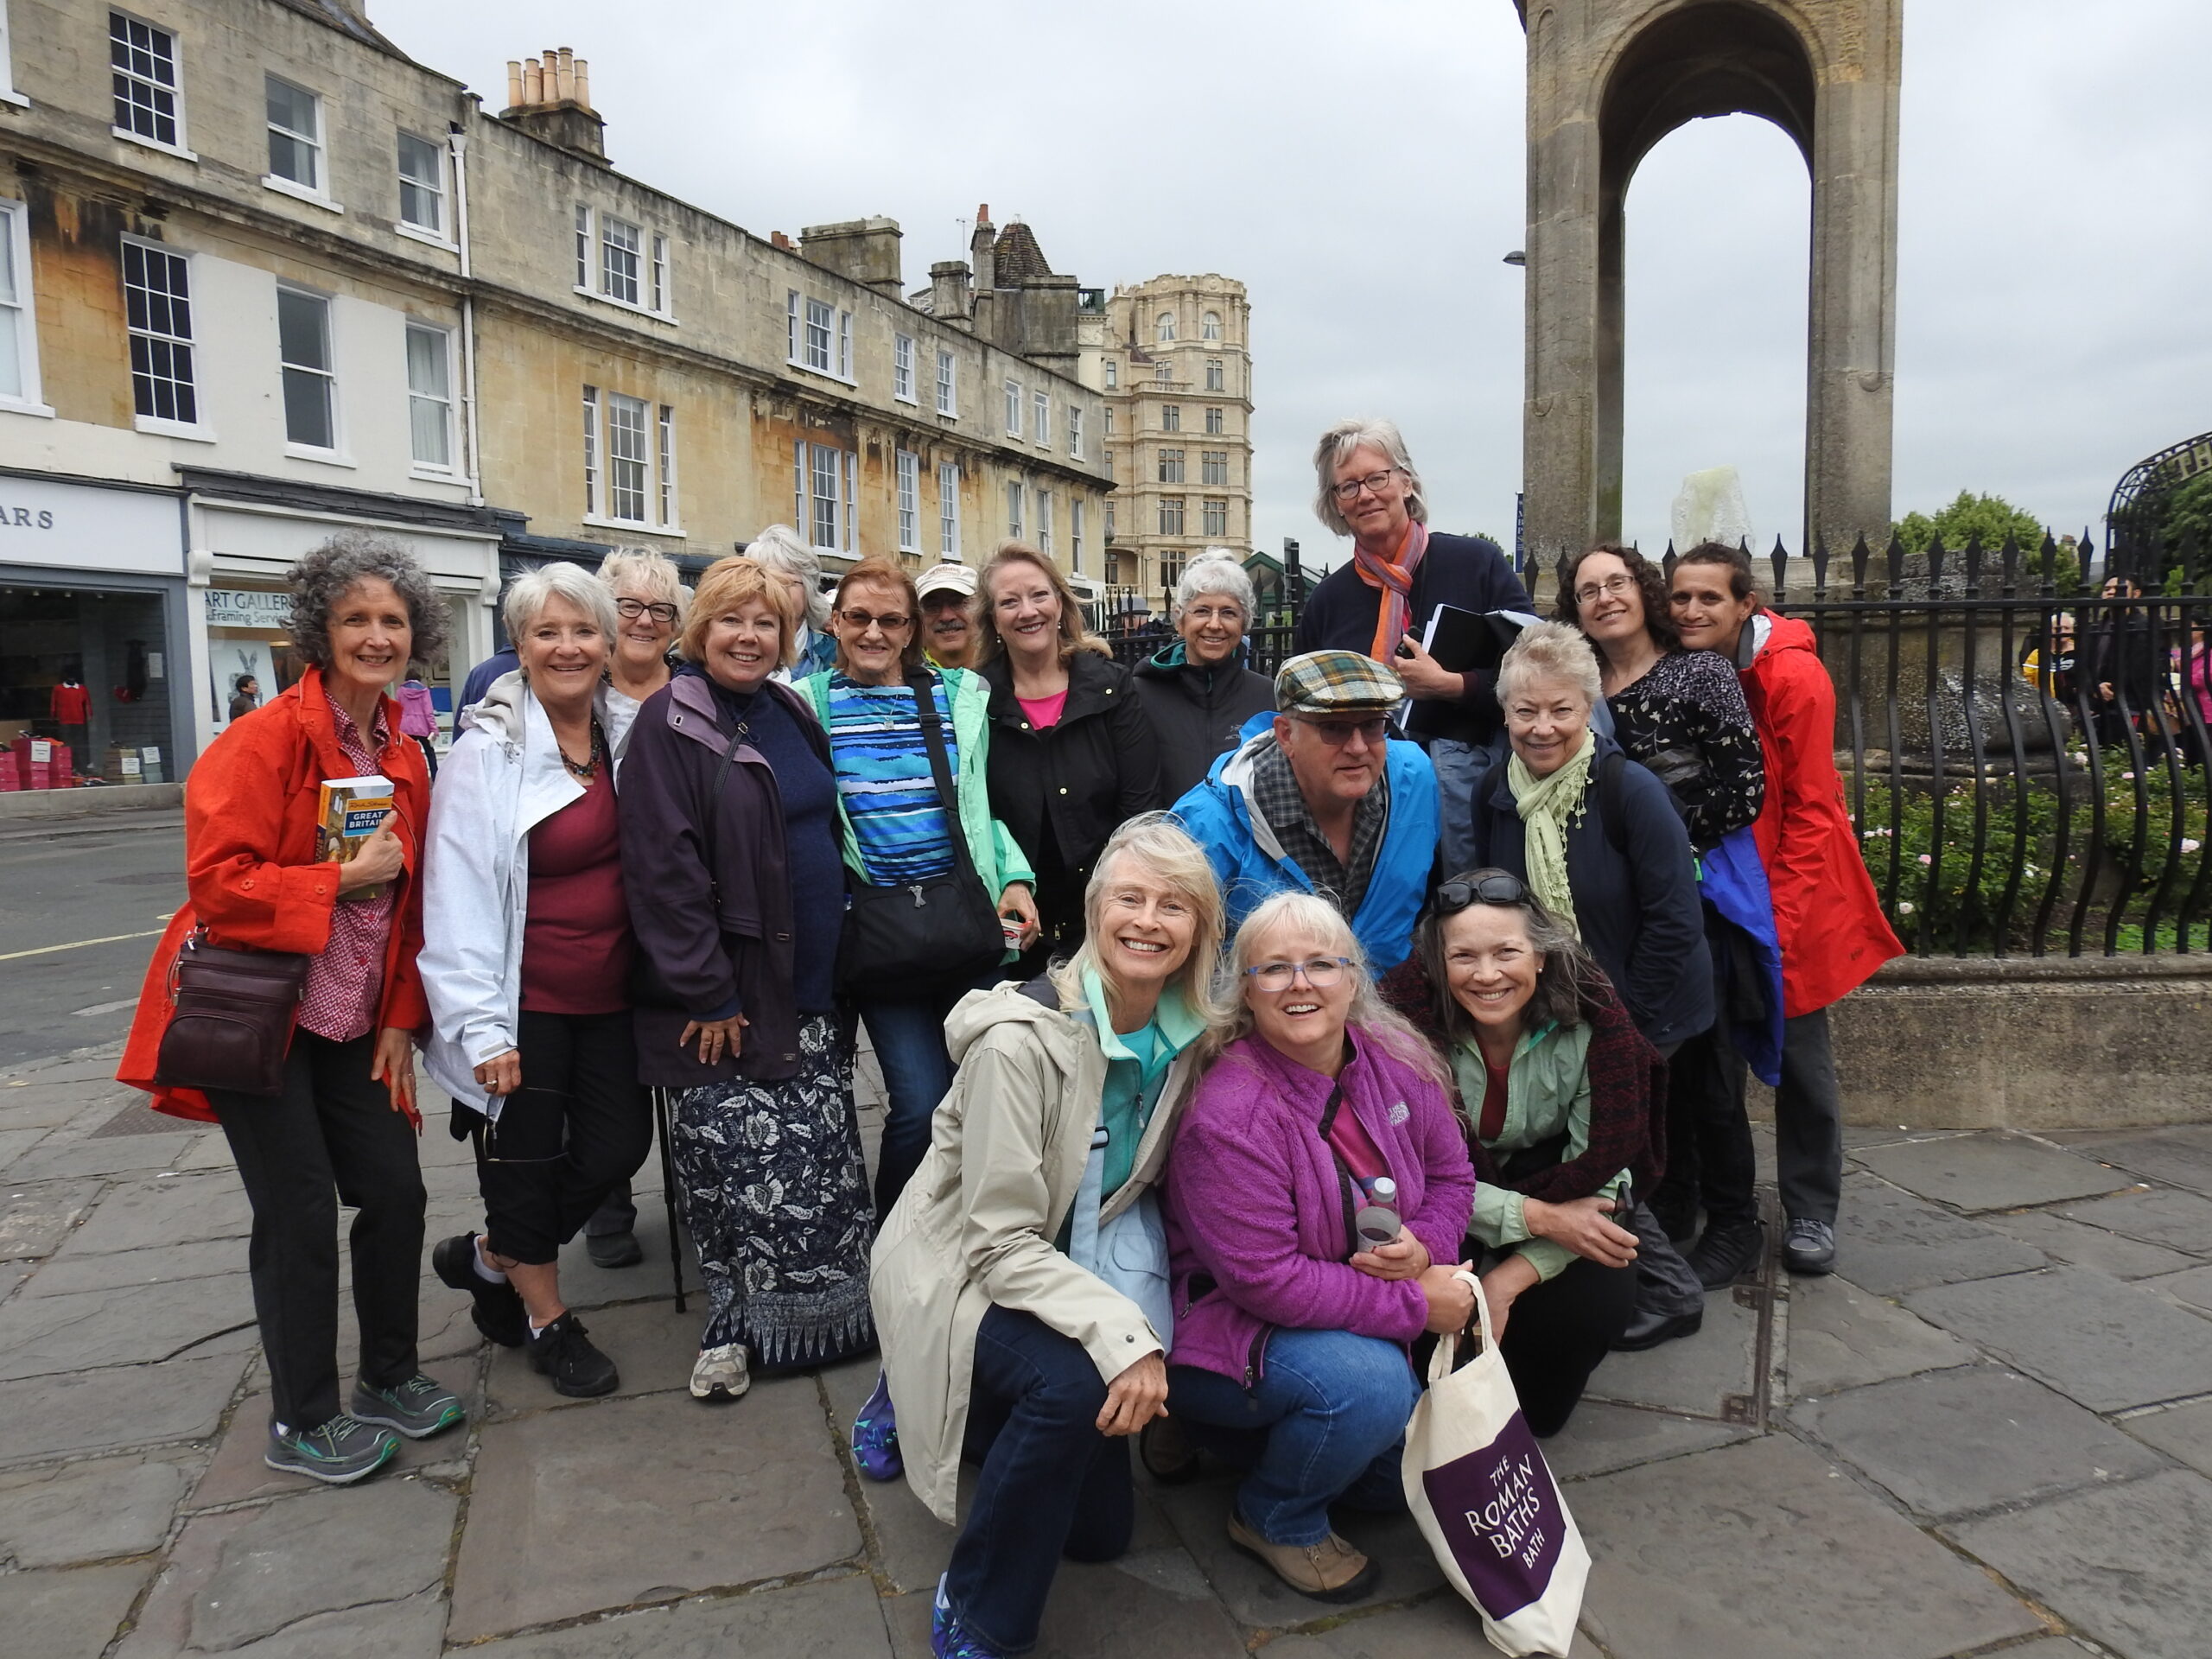 Ensemble touring group in raincoats, Bath England, 2018